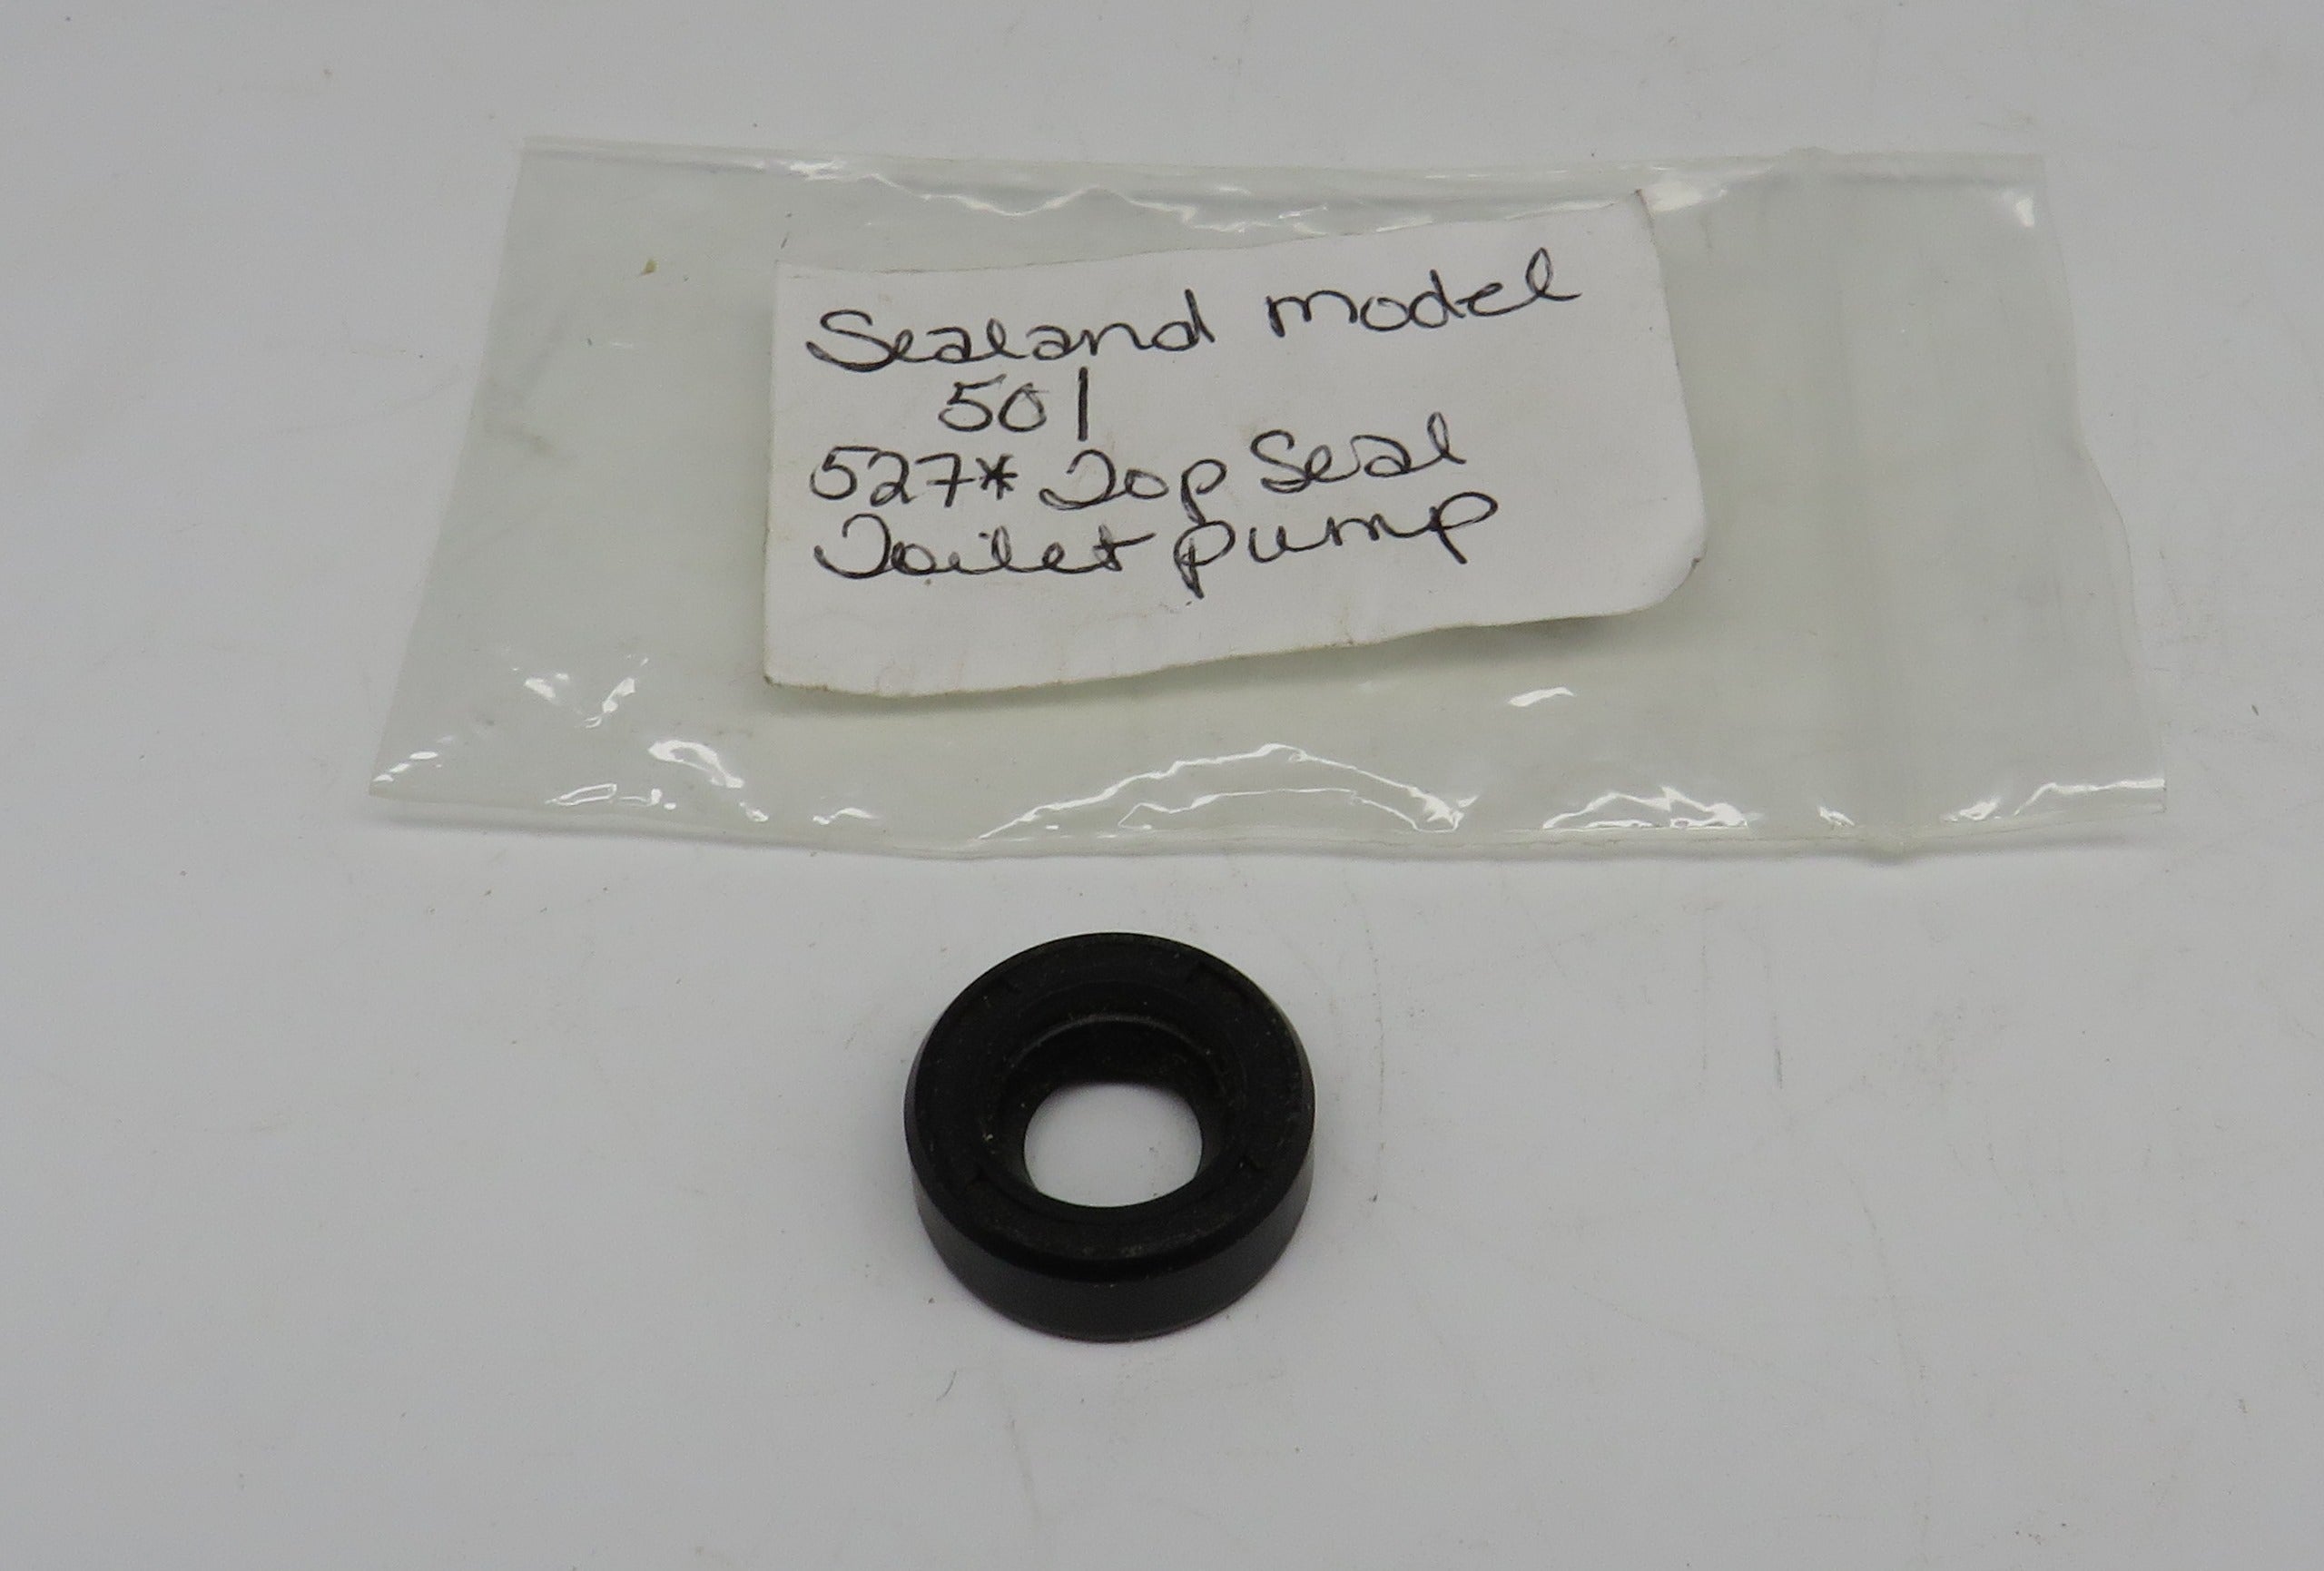 Sealand Model 501 Top Seal Toilet Pump 527* (OBSOLETE)